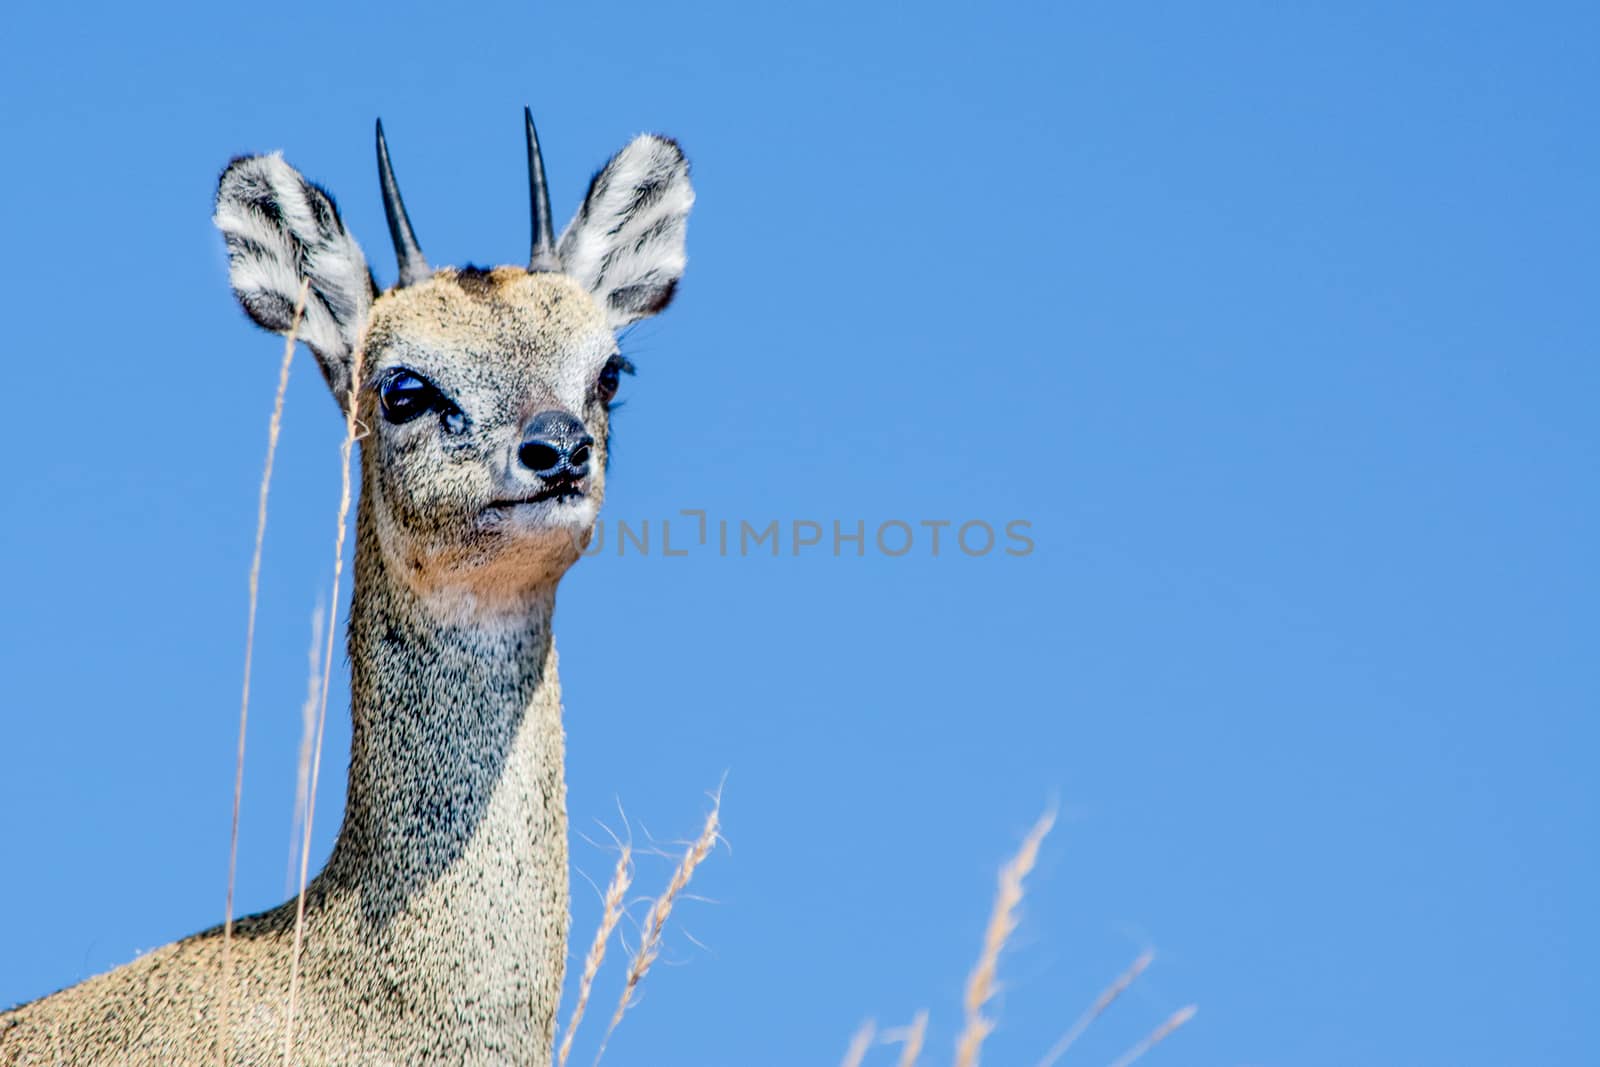 Klipspringer antelope (Oreotragus oreotragus) on blue sky in the background. Plenty of copy space. Animal wildlife